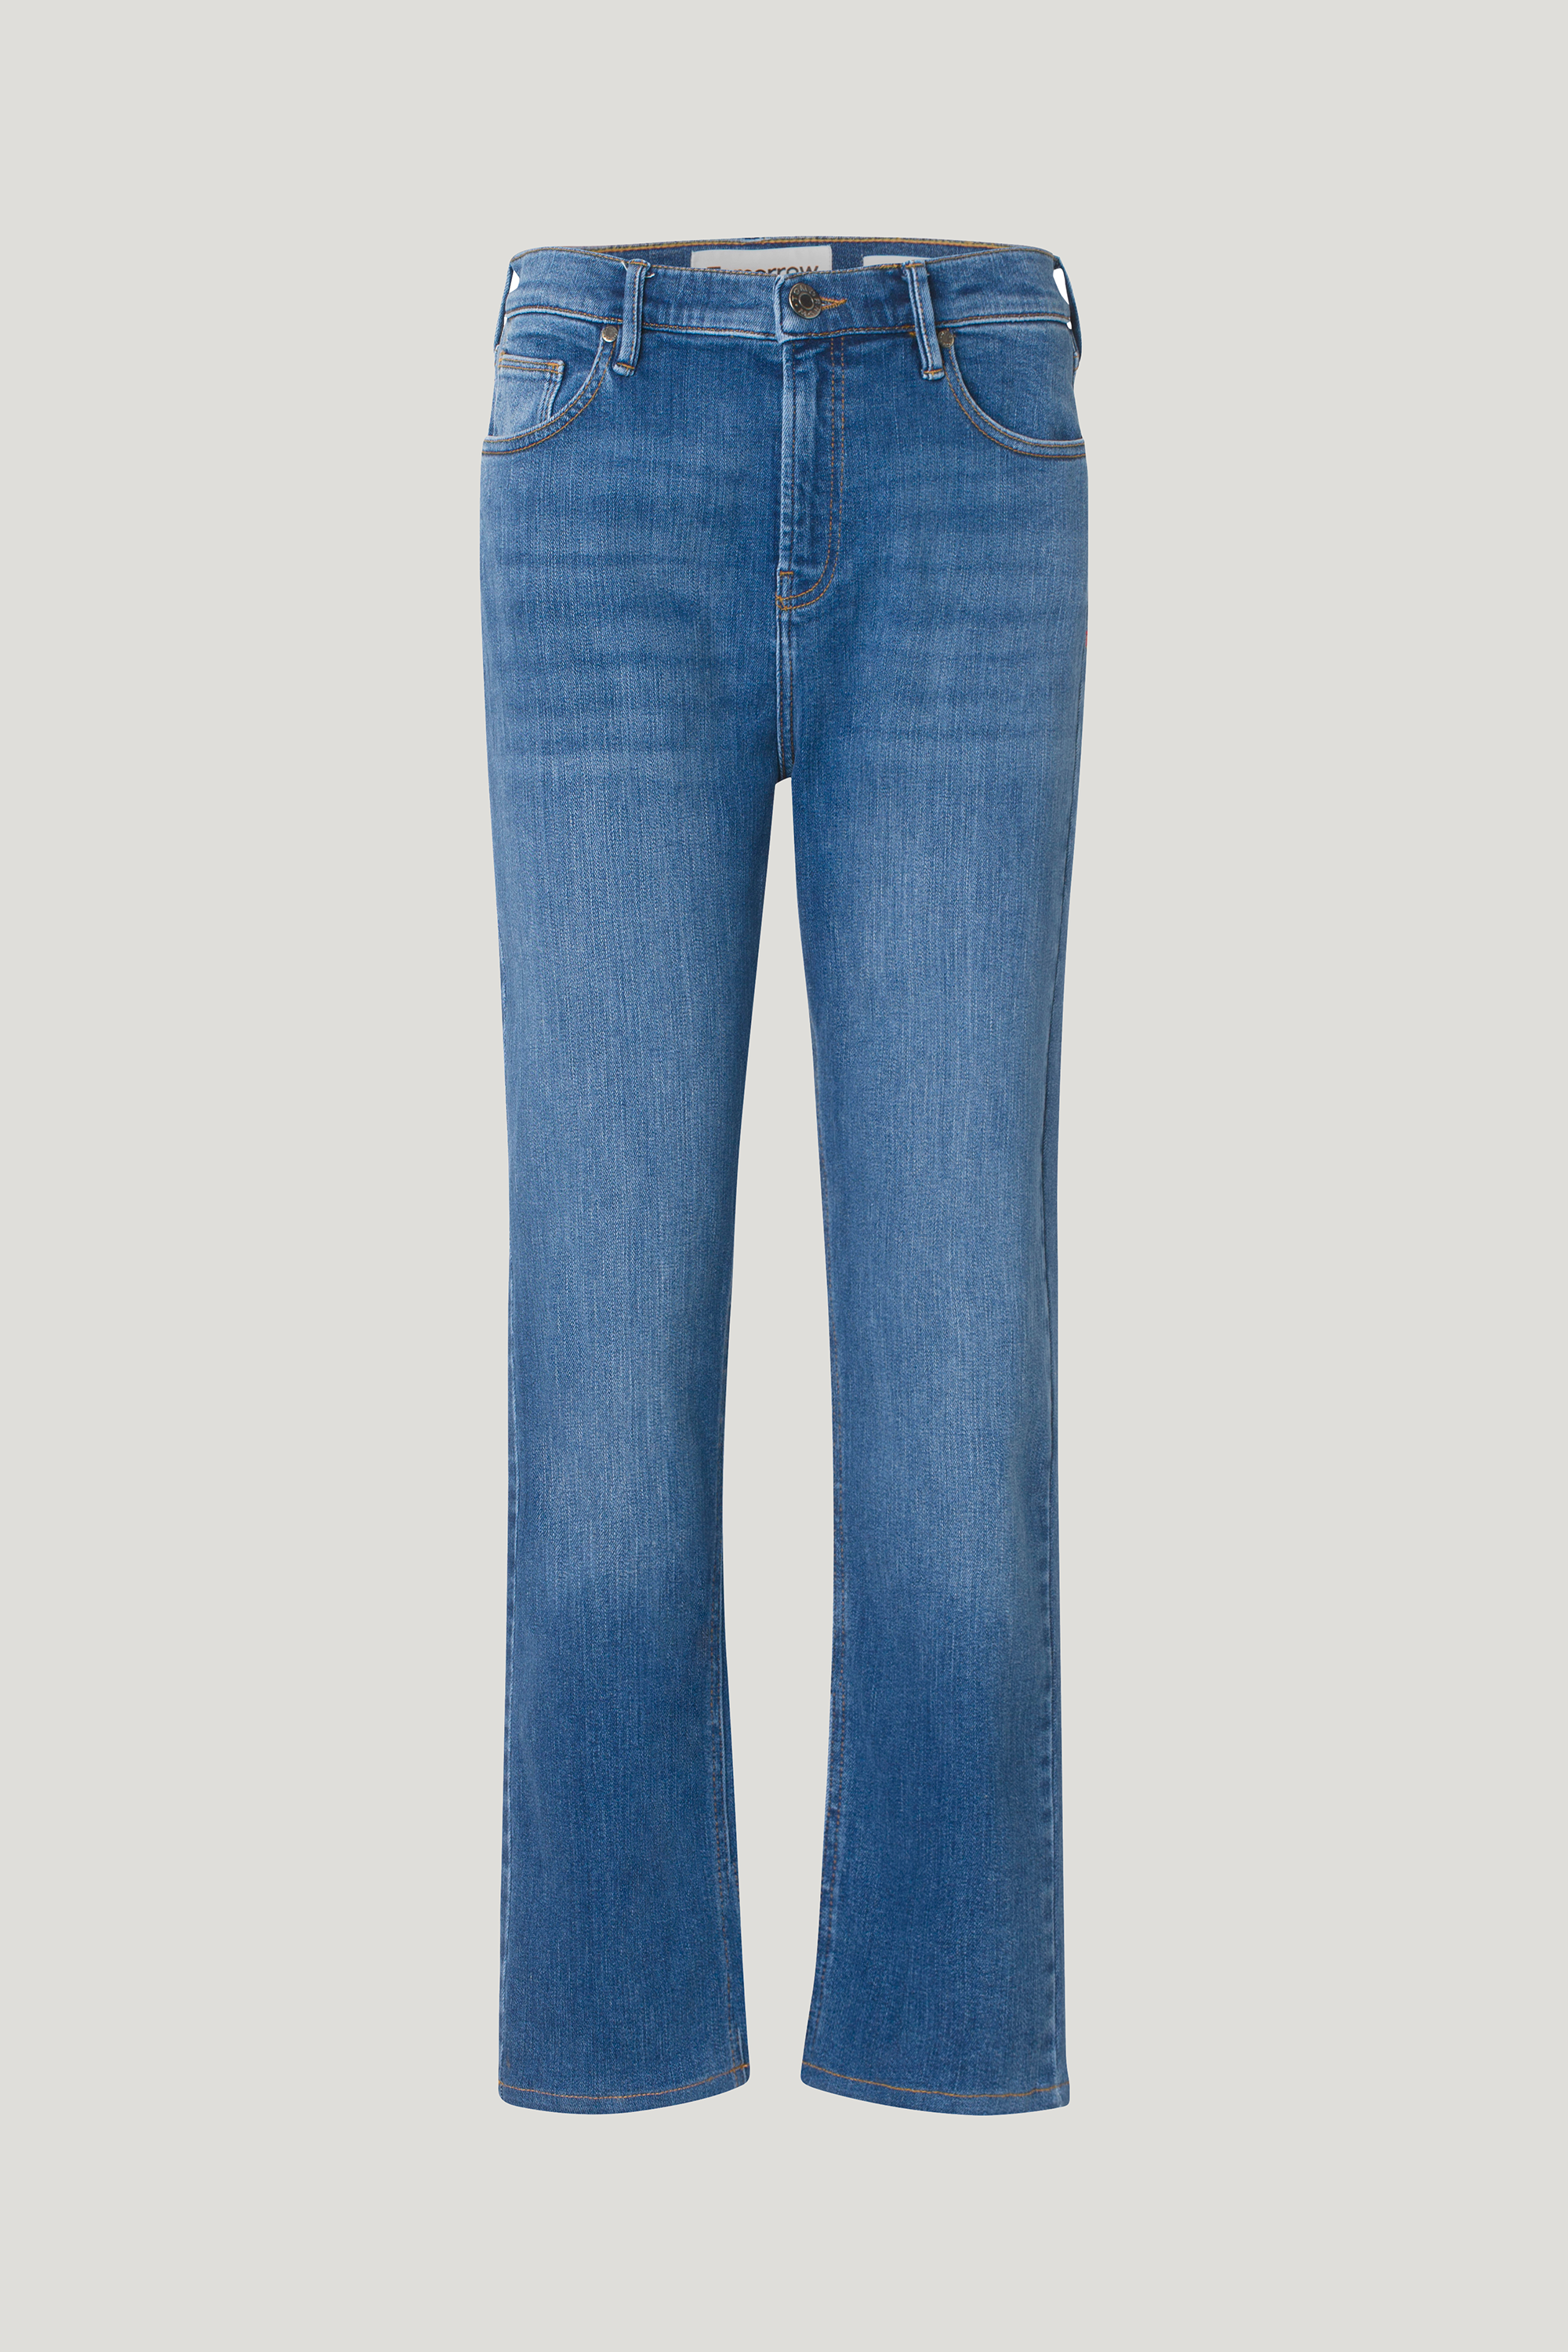 Tomorrow TD Teresa Jeans Wash Prato Vintage Jeans & Pants 51 Denim Blue